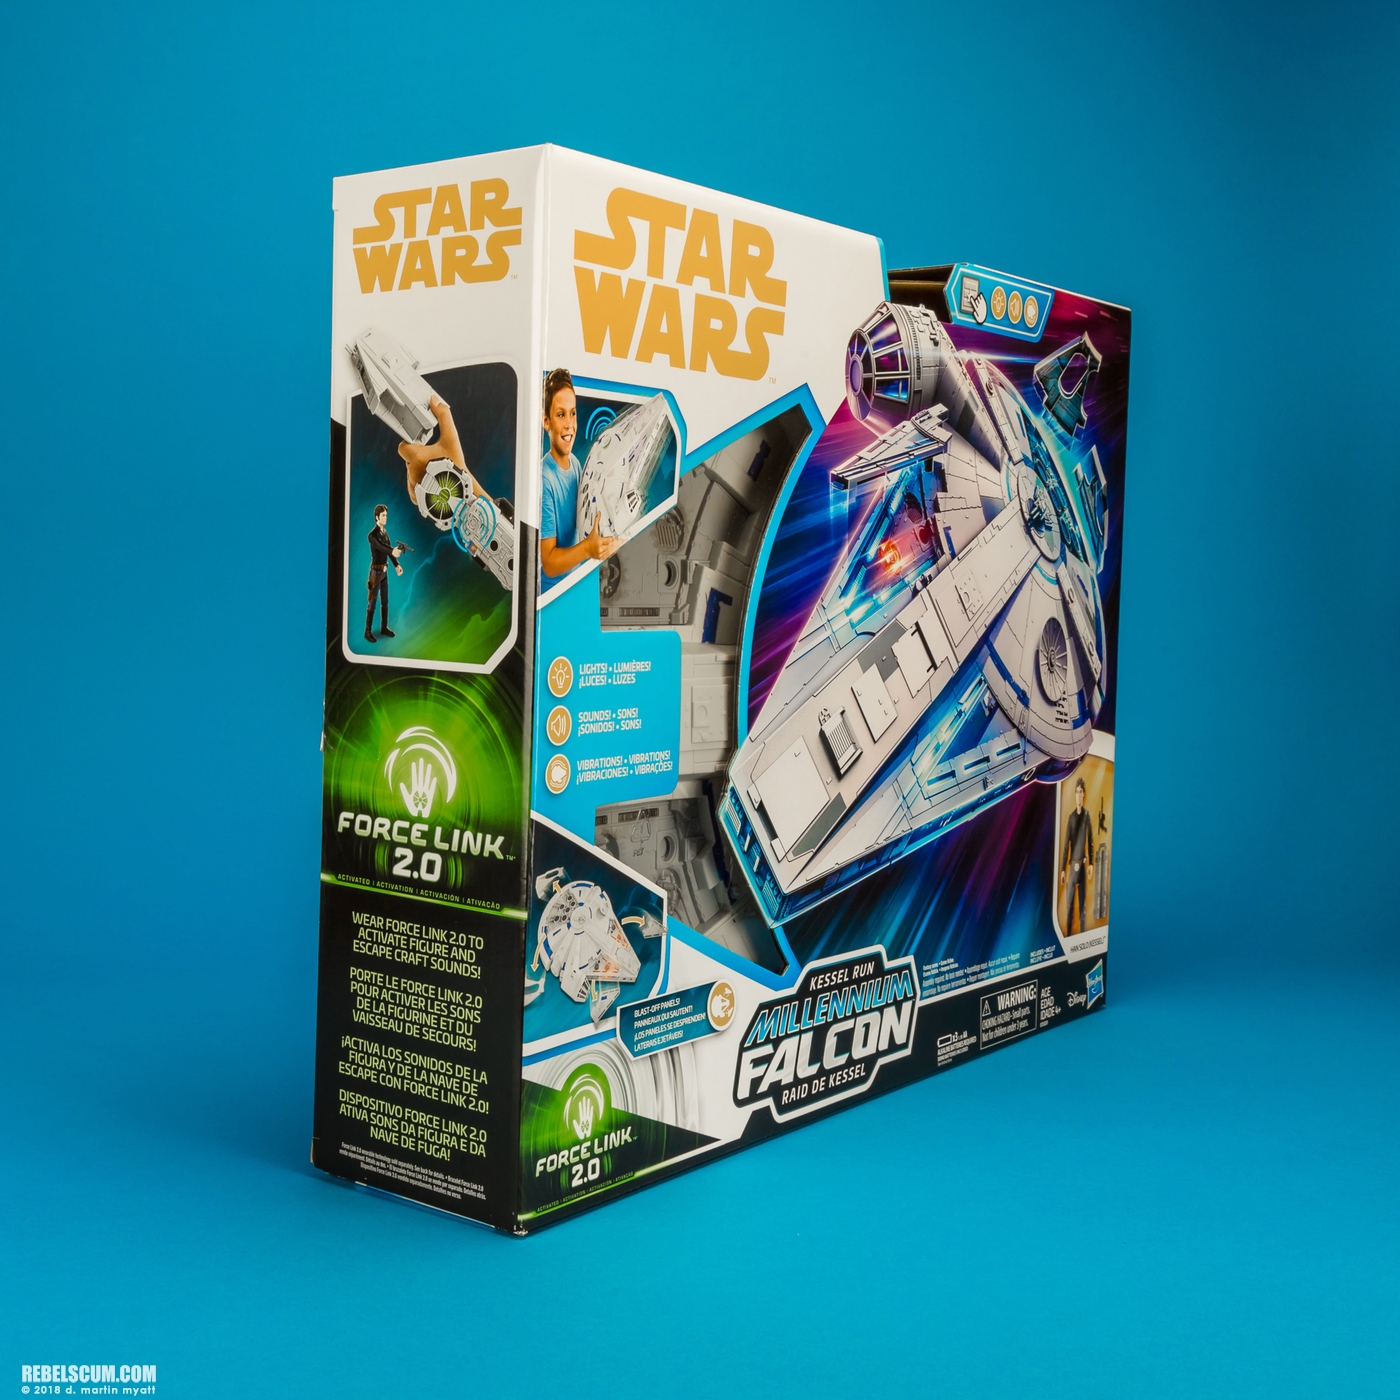 Kessel-Run-Millennium-Falcon-Solo-Star-Wars-Universe-Hasbro-035.jpg